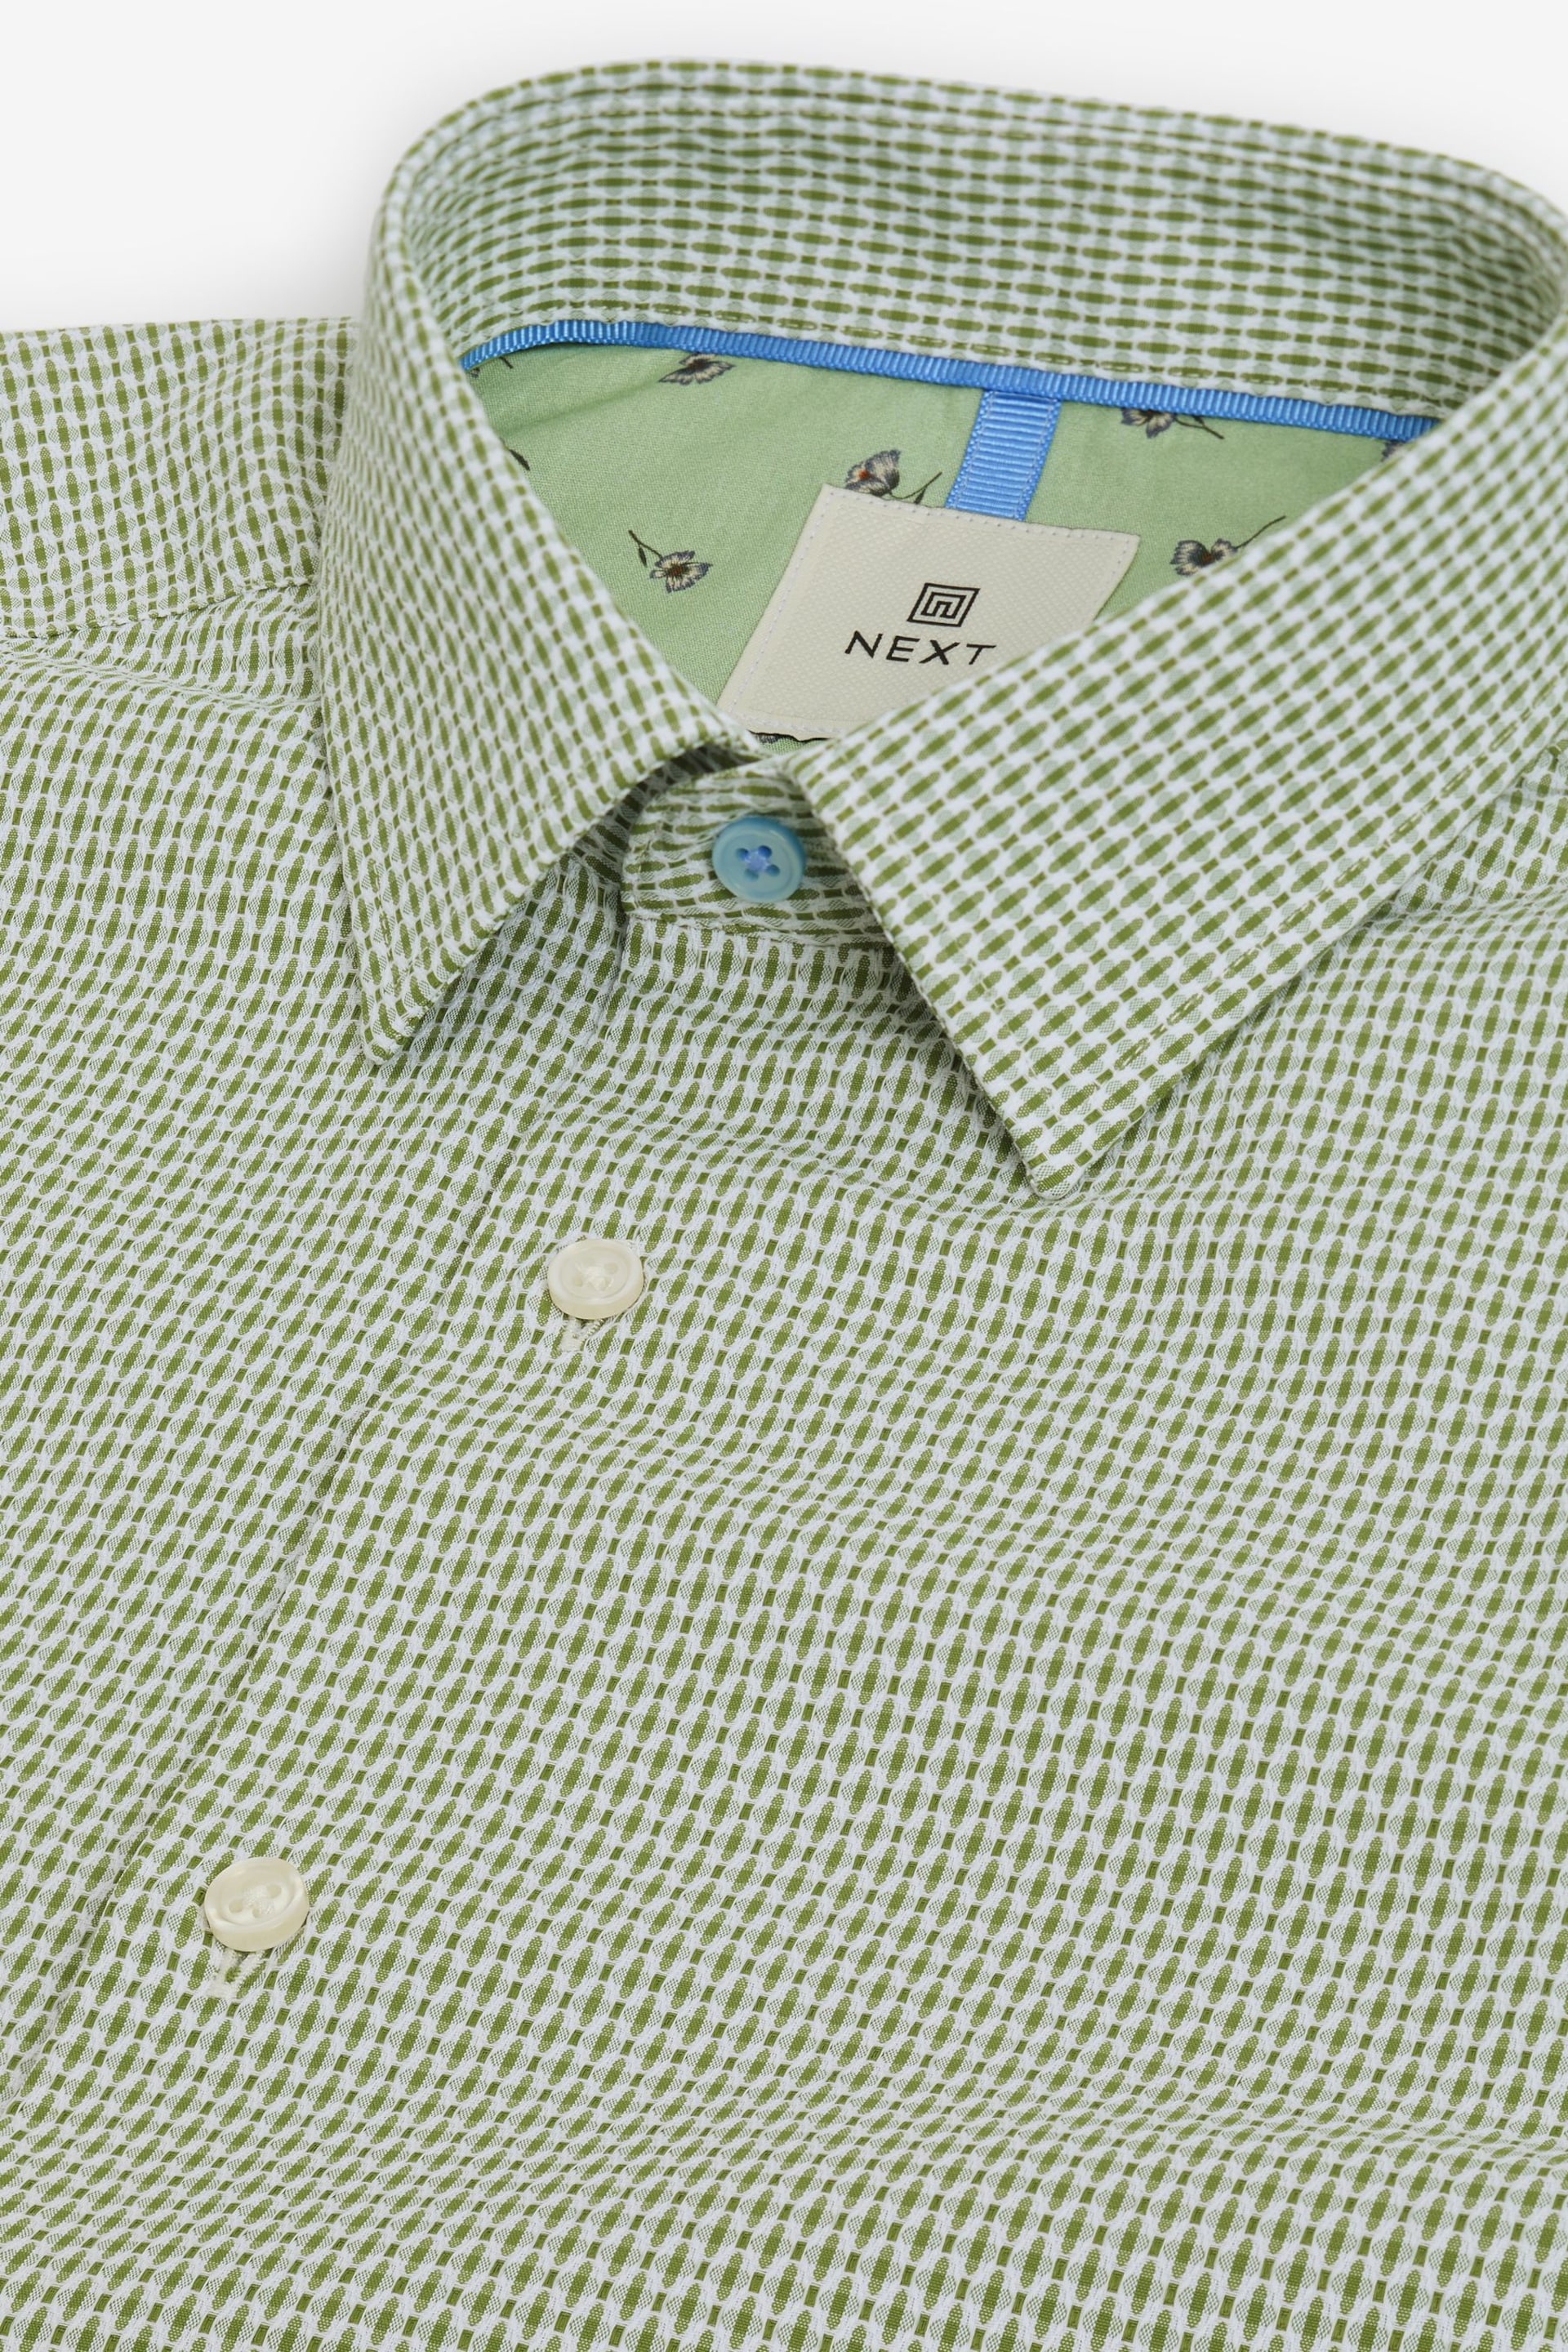 White/Green Textured Short Sleeve Shirt - Image 7 of 8